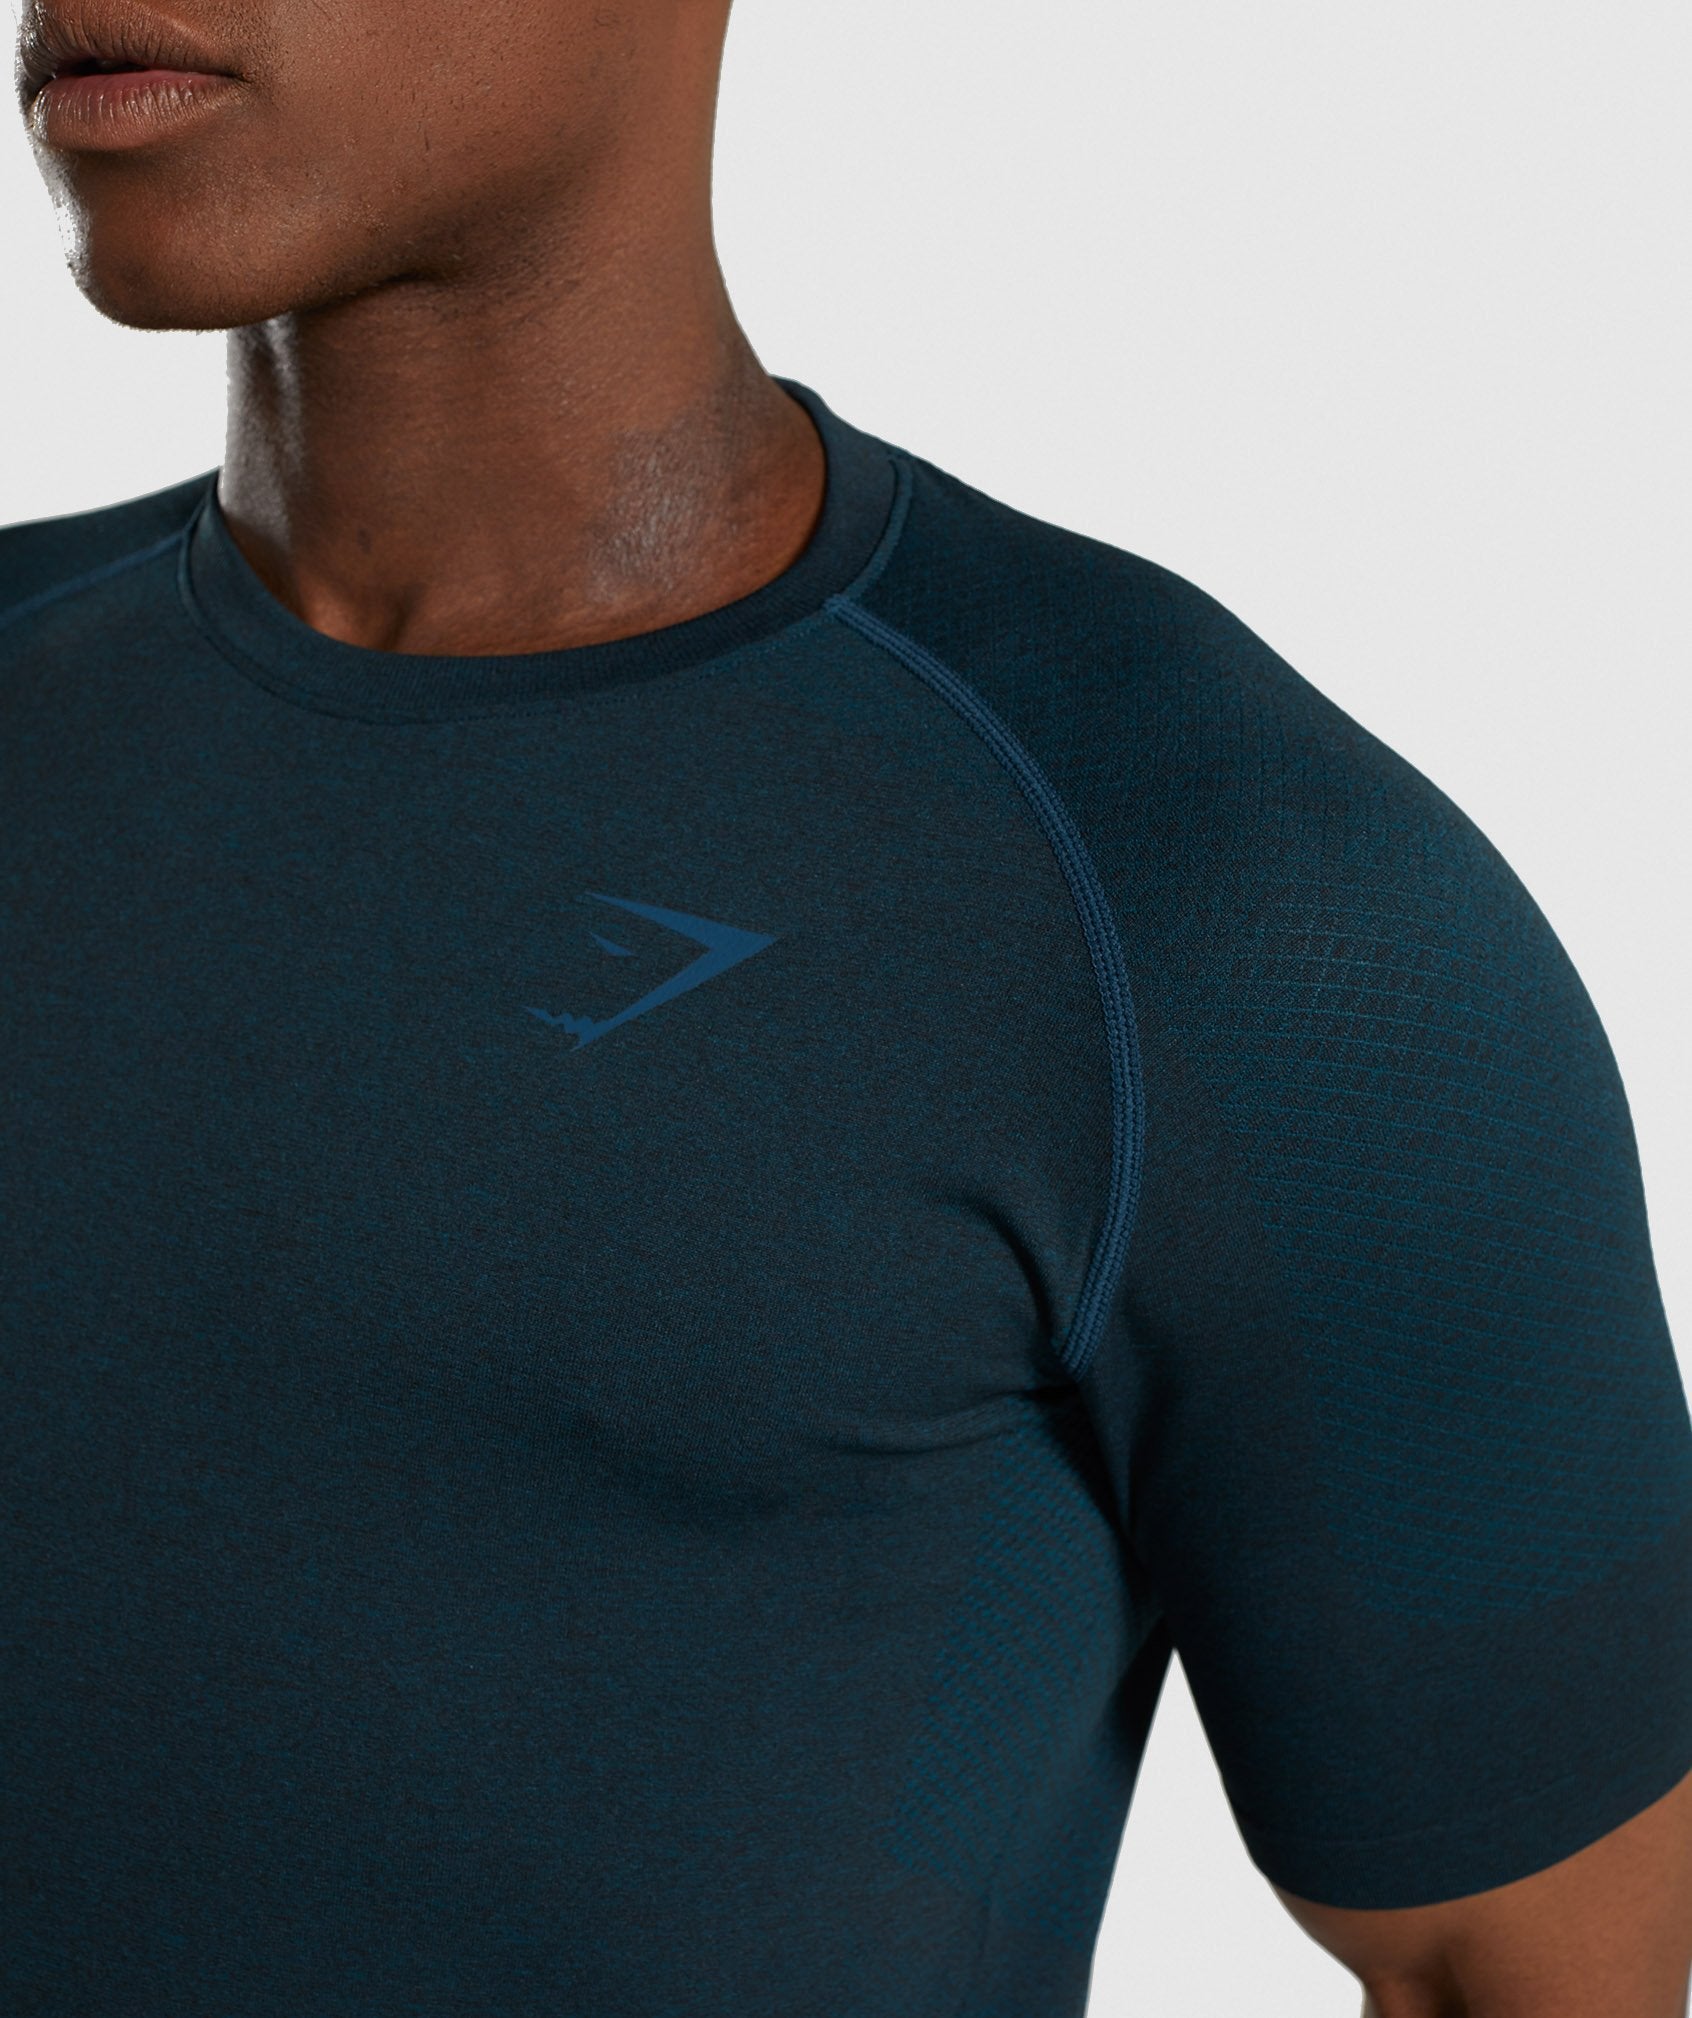 Define Seamless T-Shirt in Blue - view 5